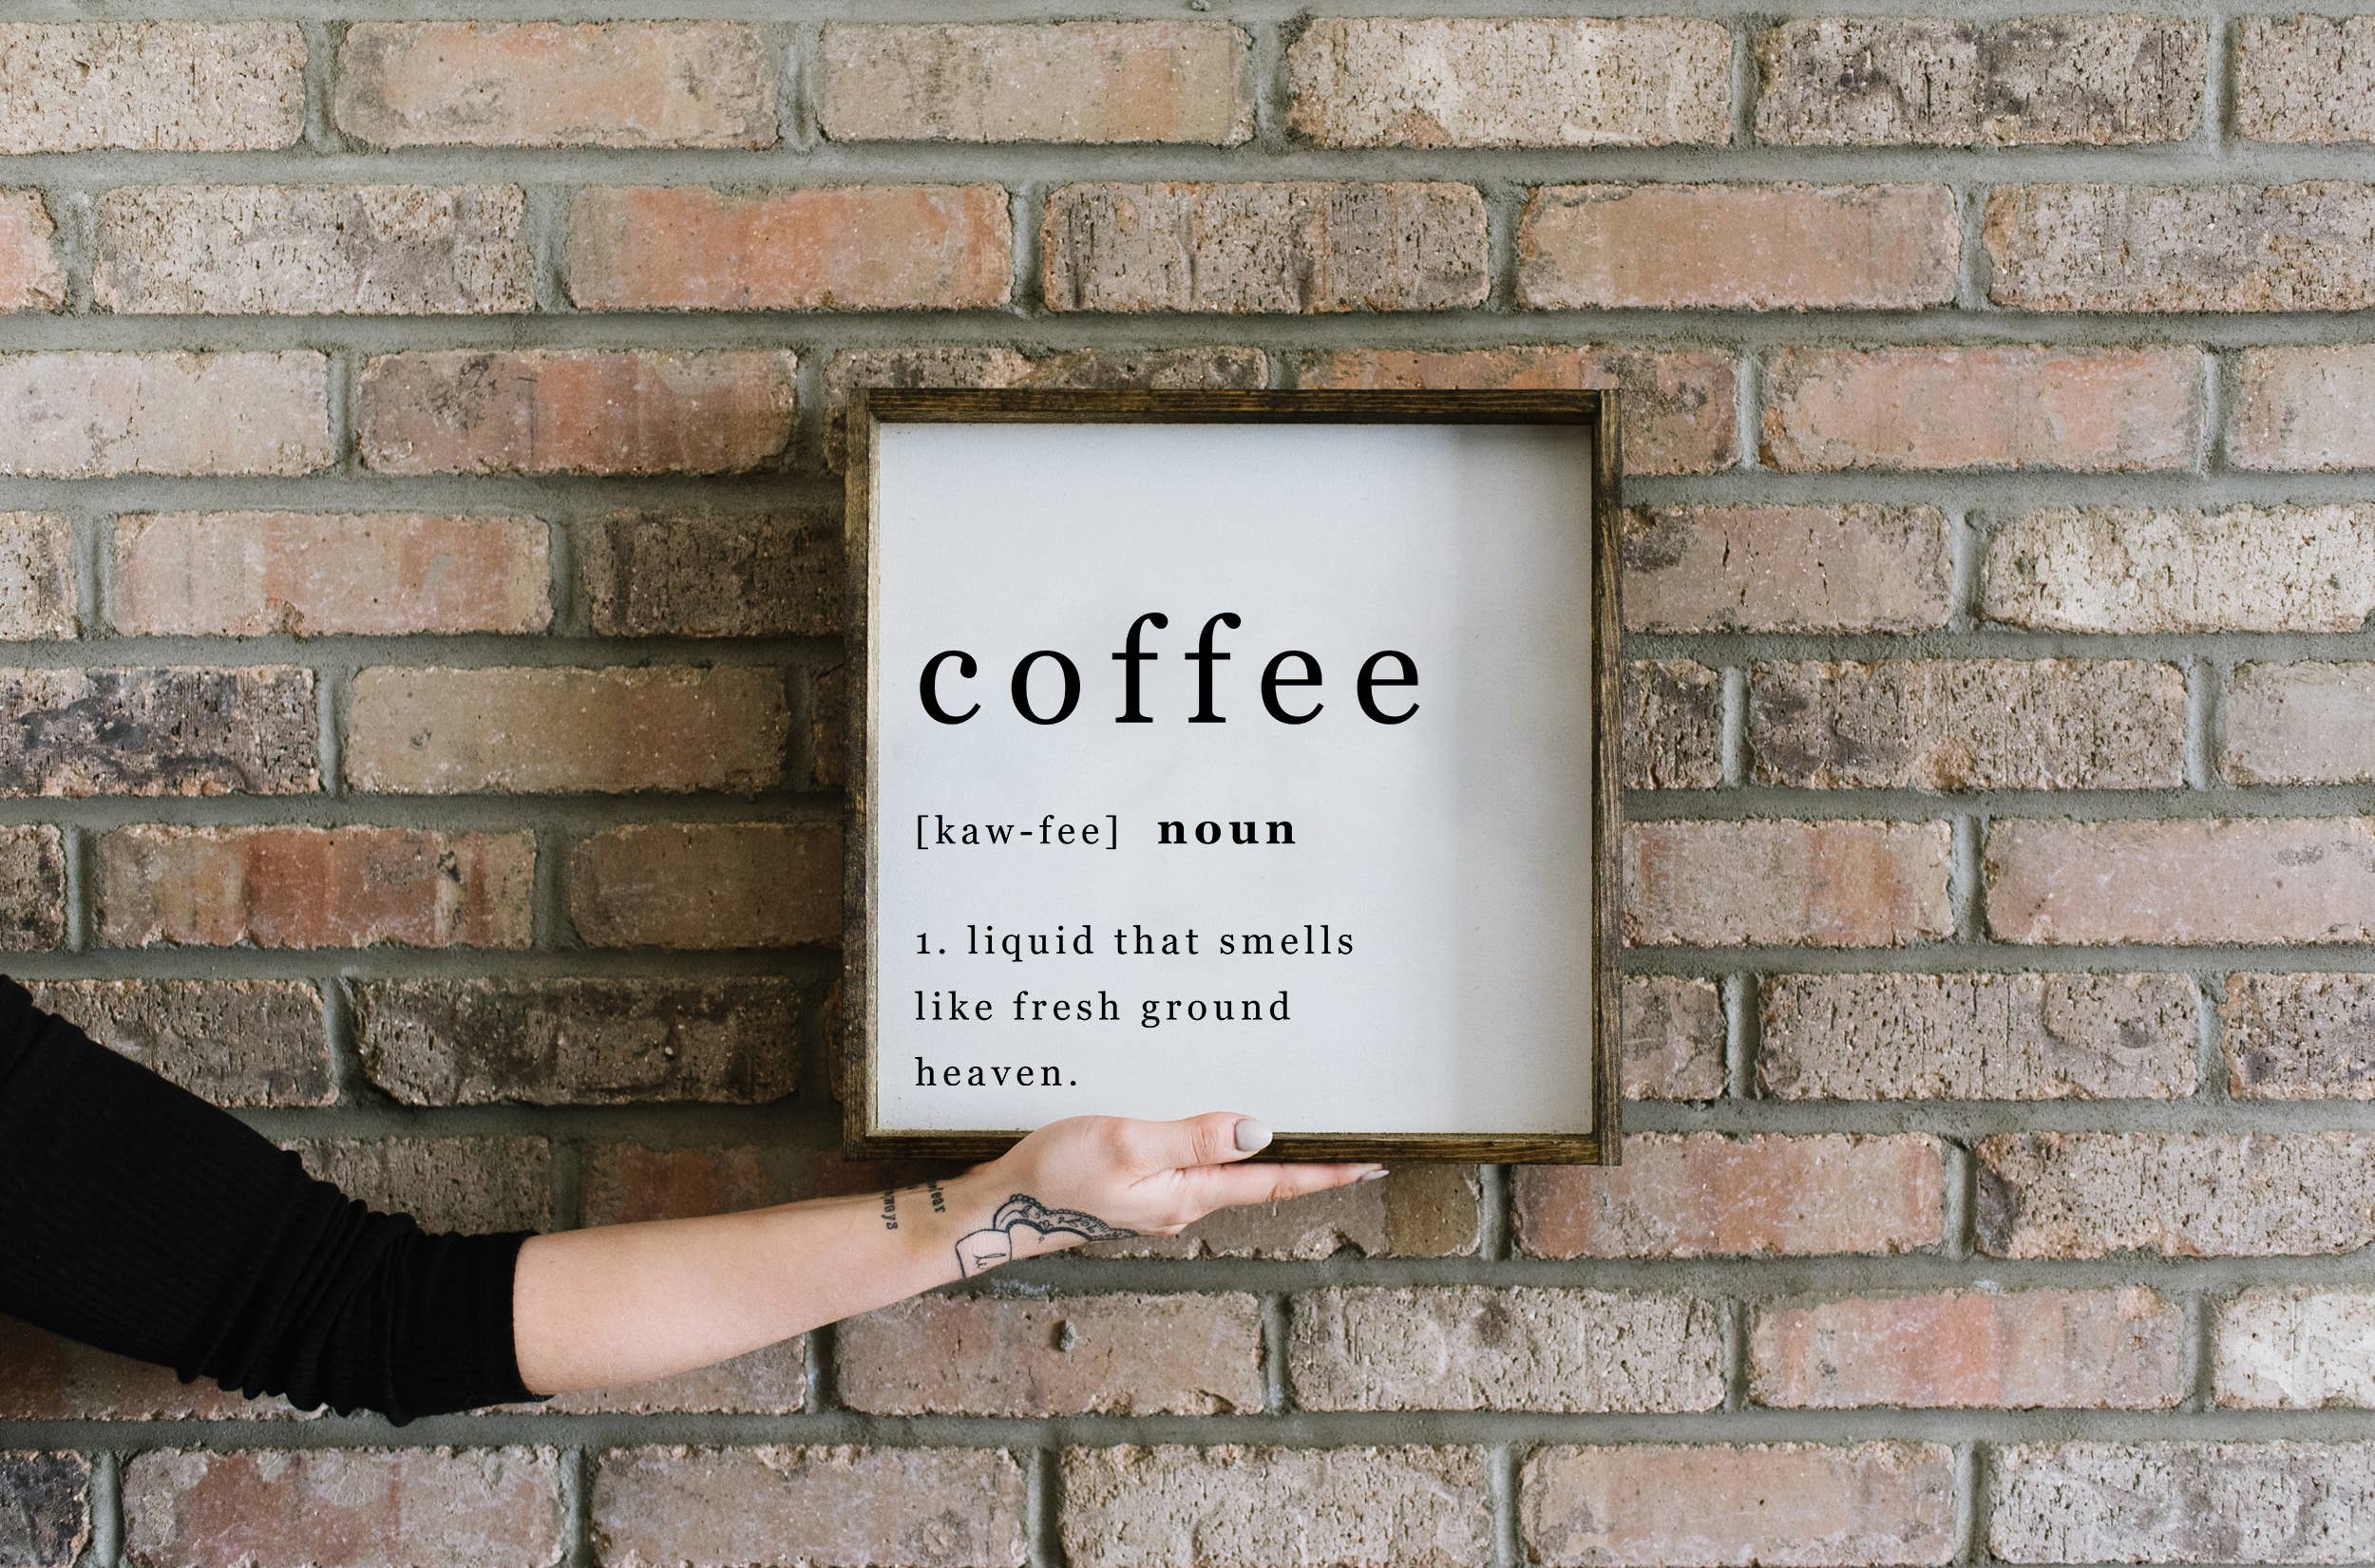 Coffee Noun Wood Sign: Black